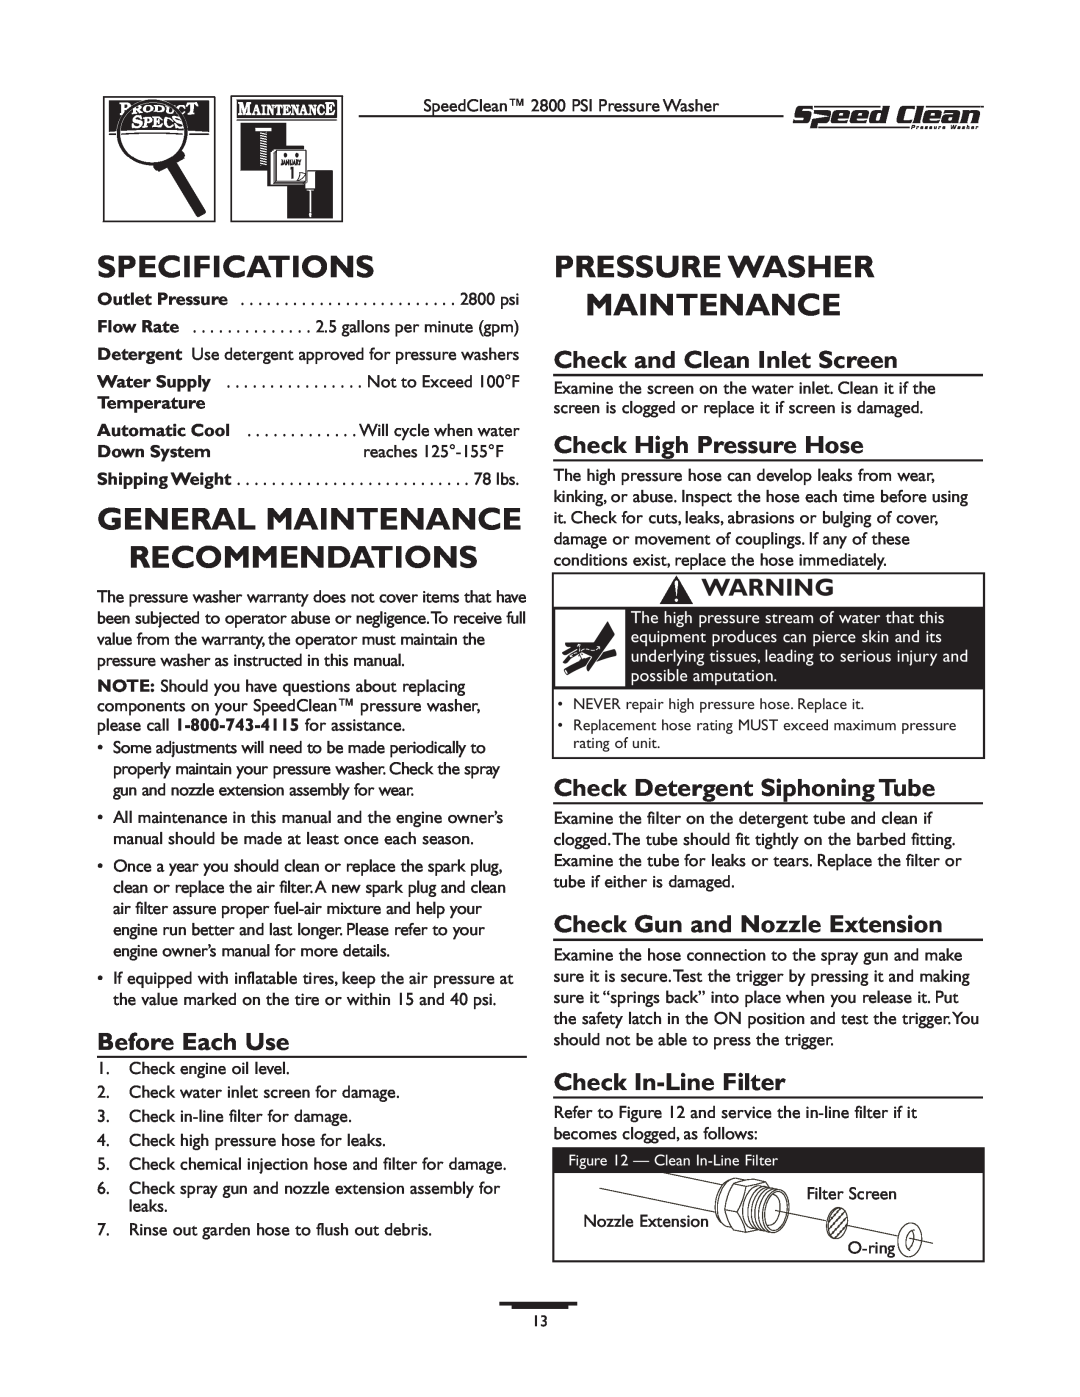 Briggs & Stratton 020212-0 Specifications, General Maintenance Recommendations, Pressure Washer Maintenance, Temperature 